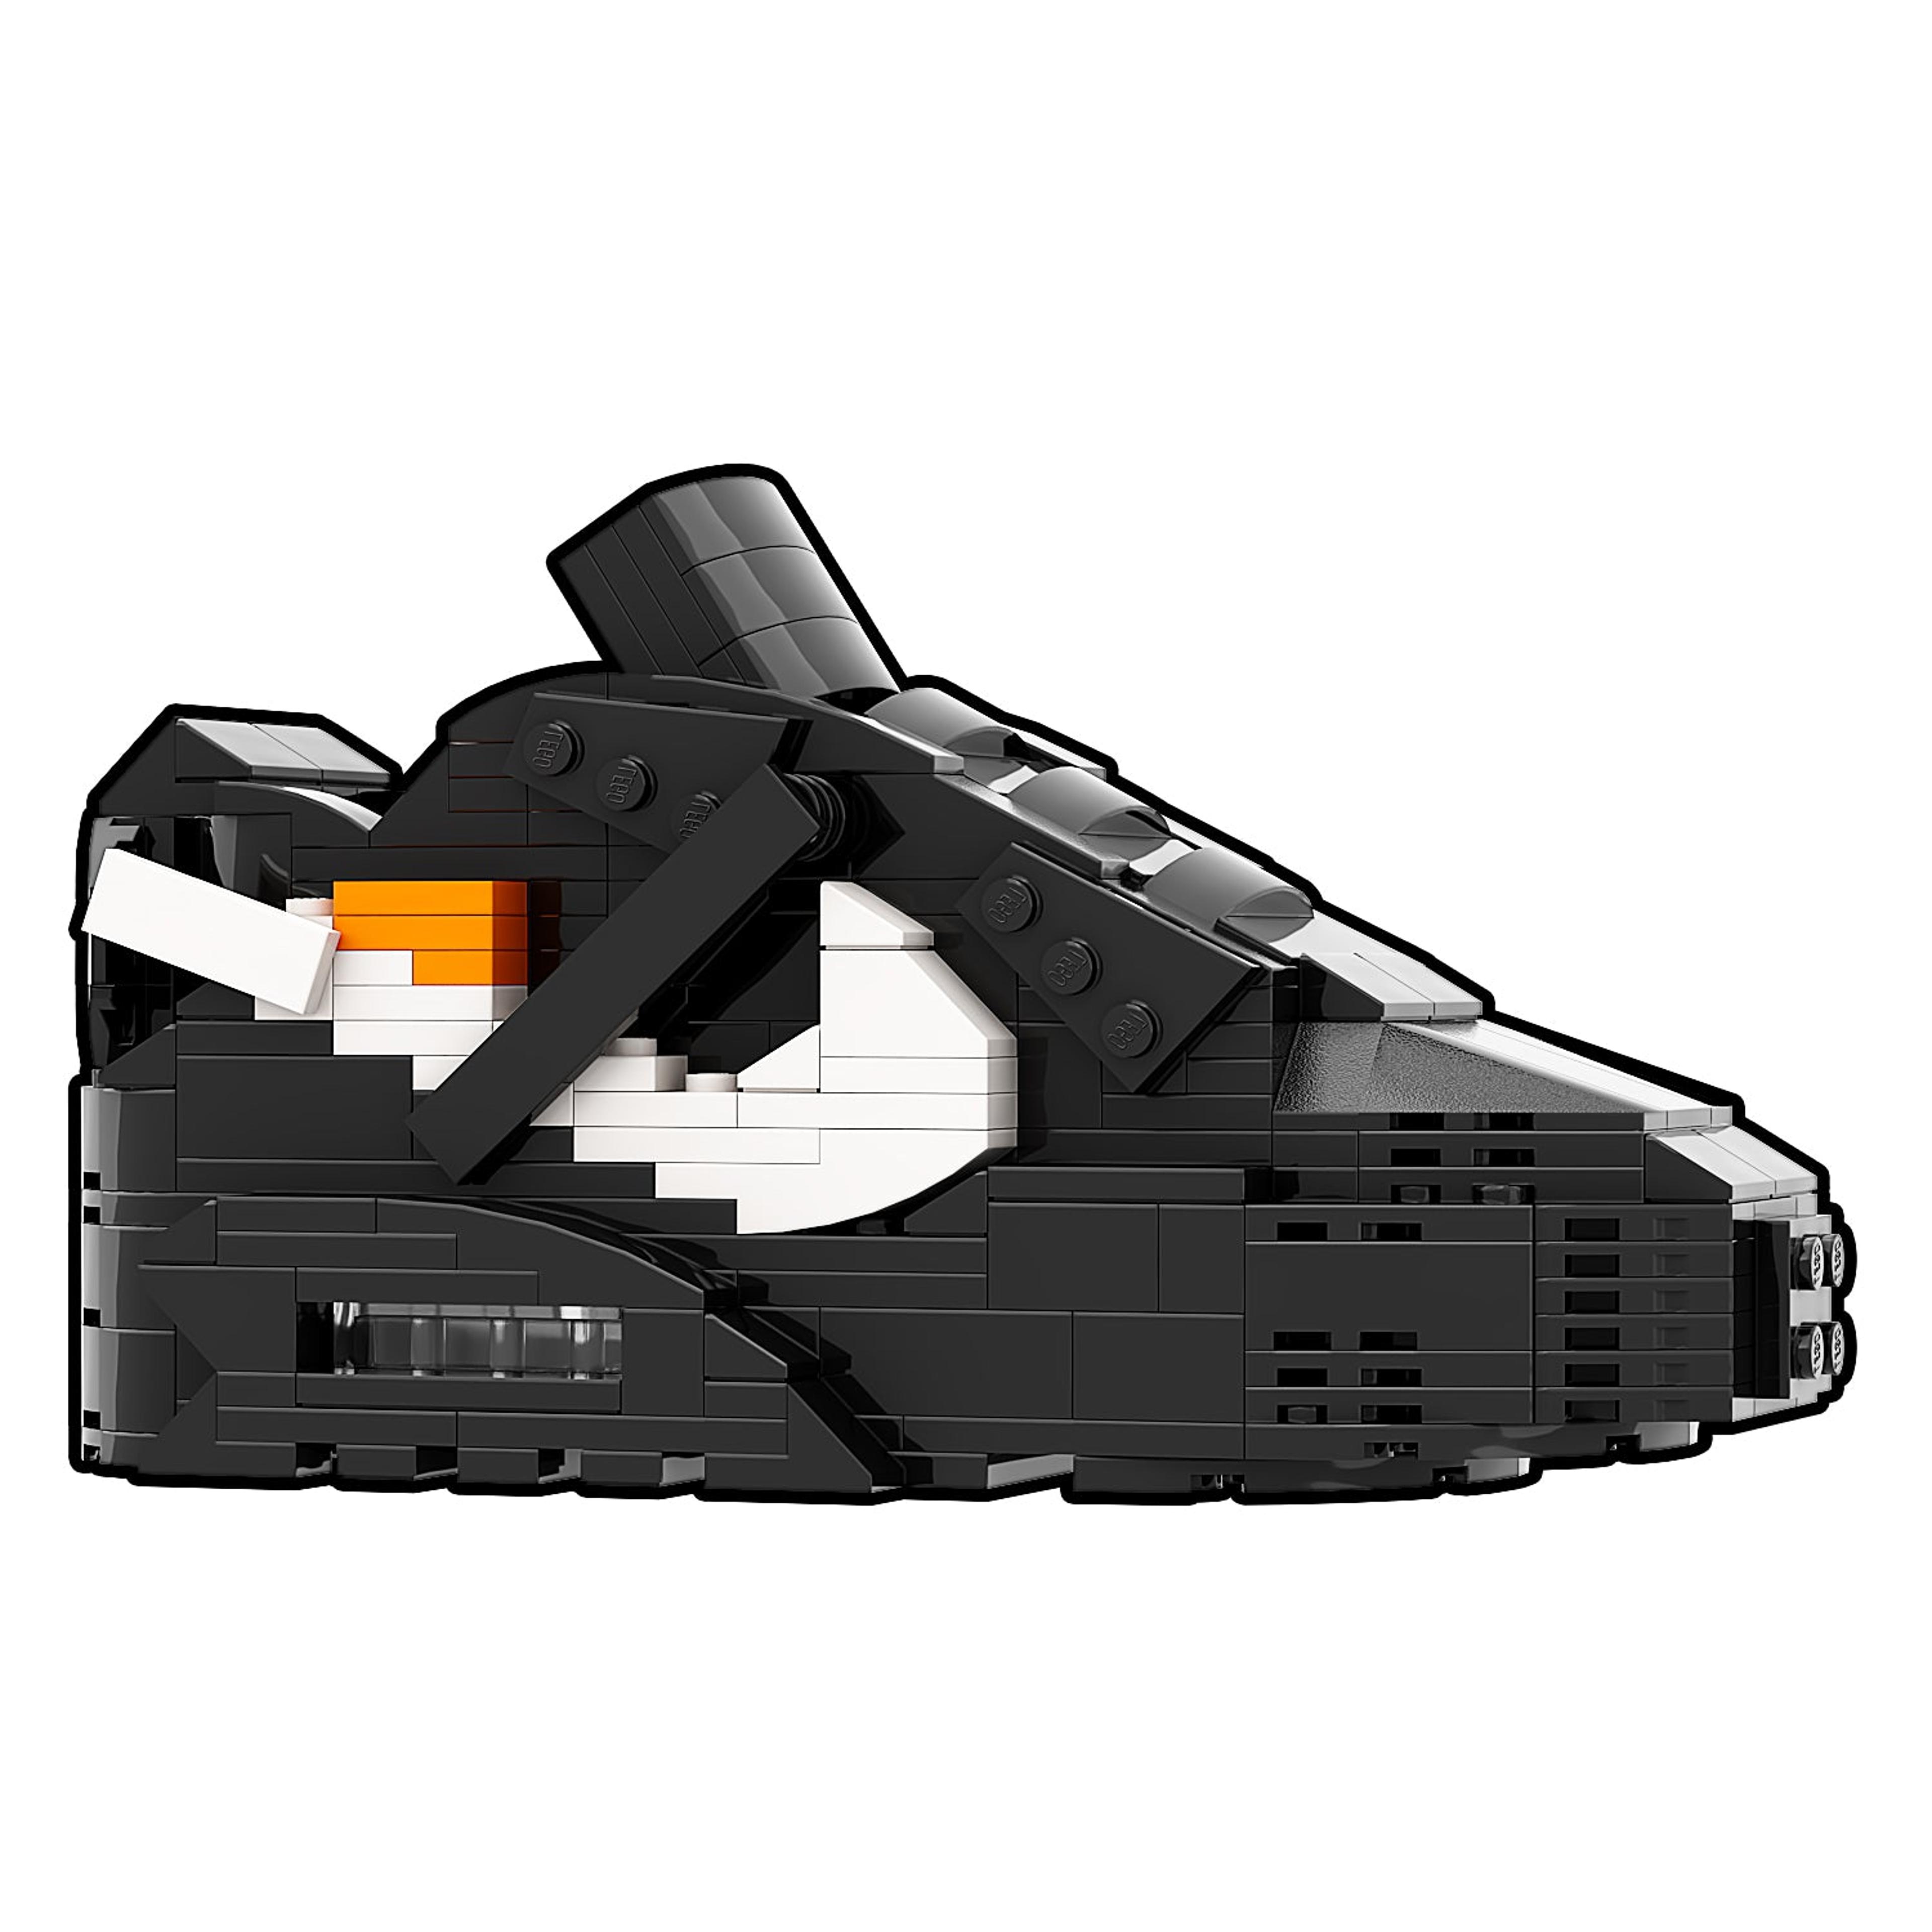 Alternate View 5 of REGULAR Air Max 90 "Off-White Black" Sneaker Bricks with Mini Fi